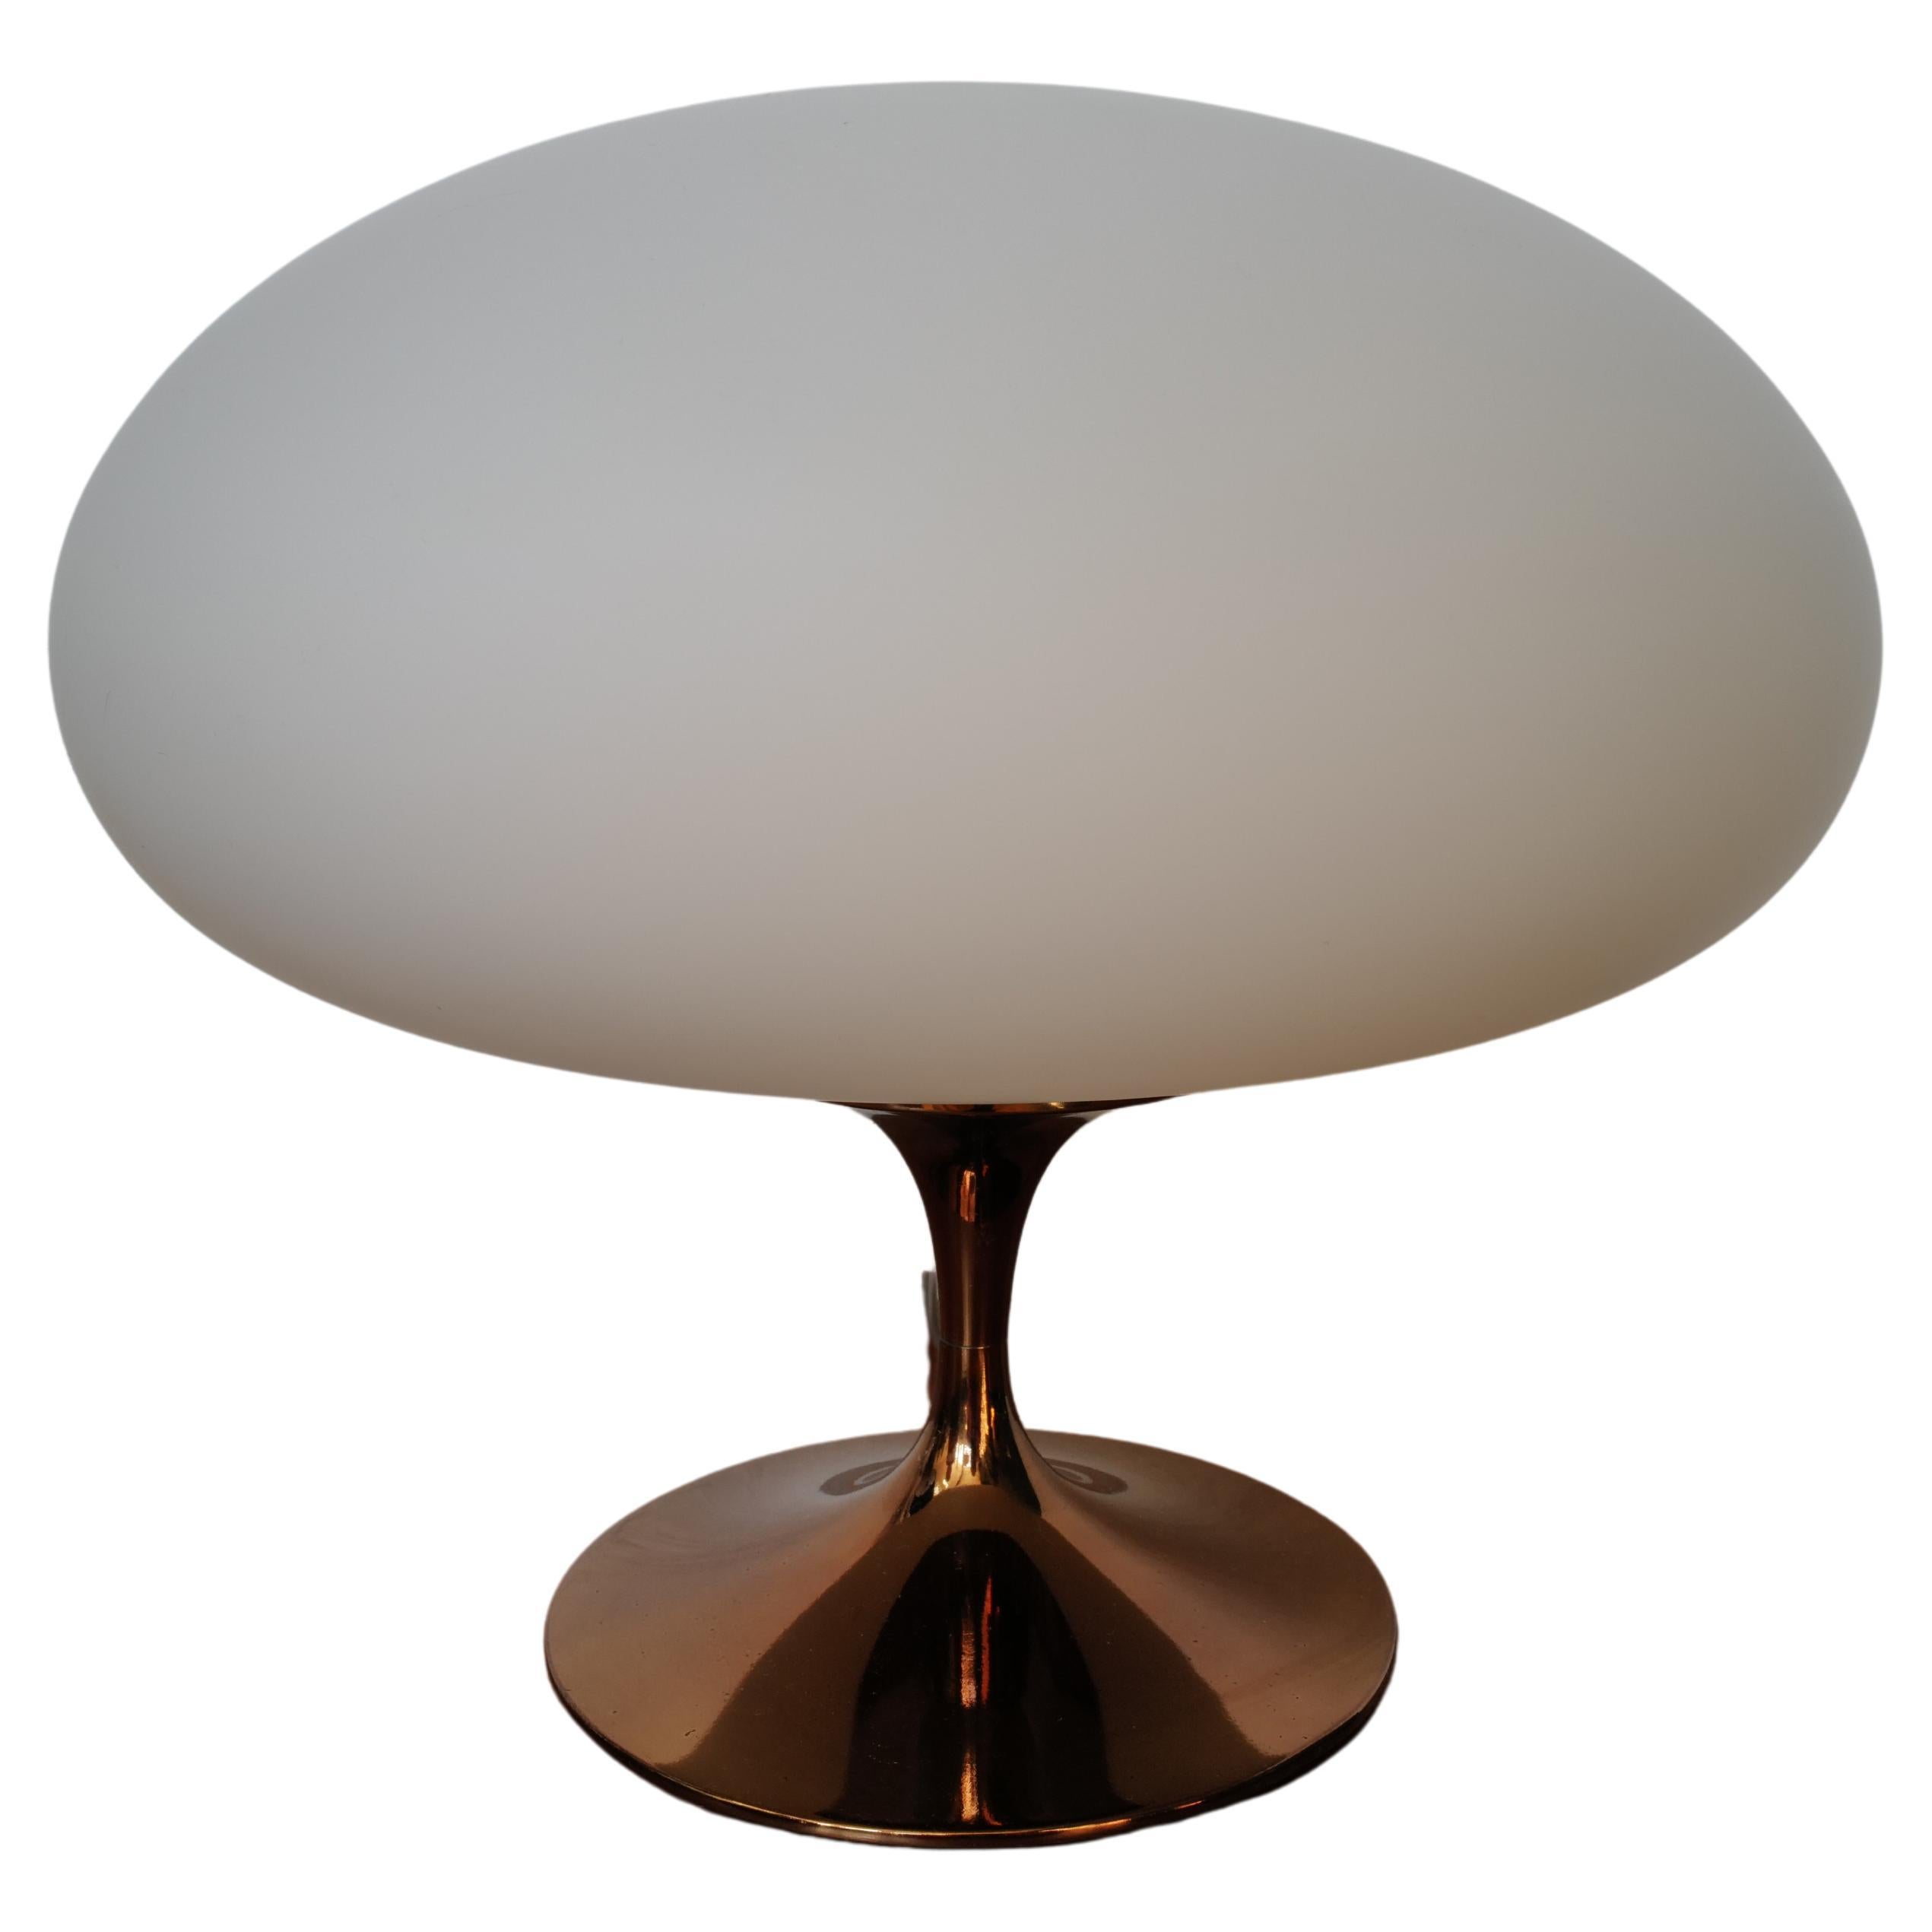 Mushroom Lamp by Laurel